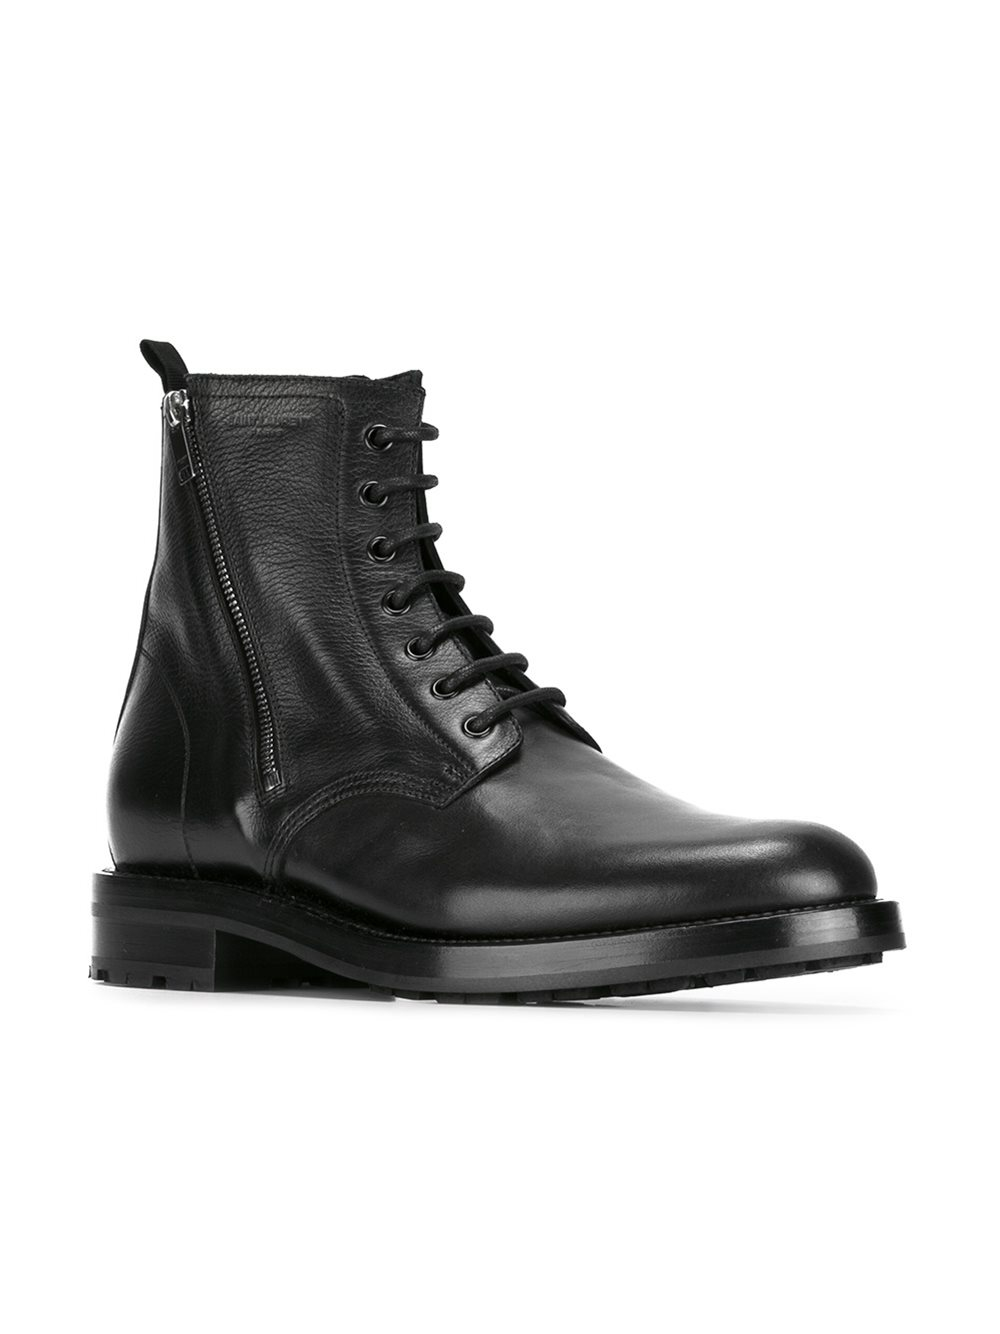 Lyst - Saint Laurent 'Ranger Leather Combat Boots in Black for Men